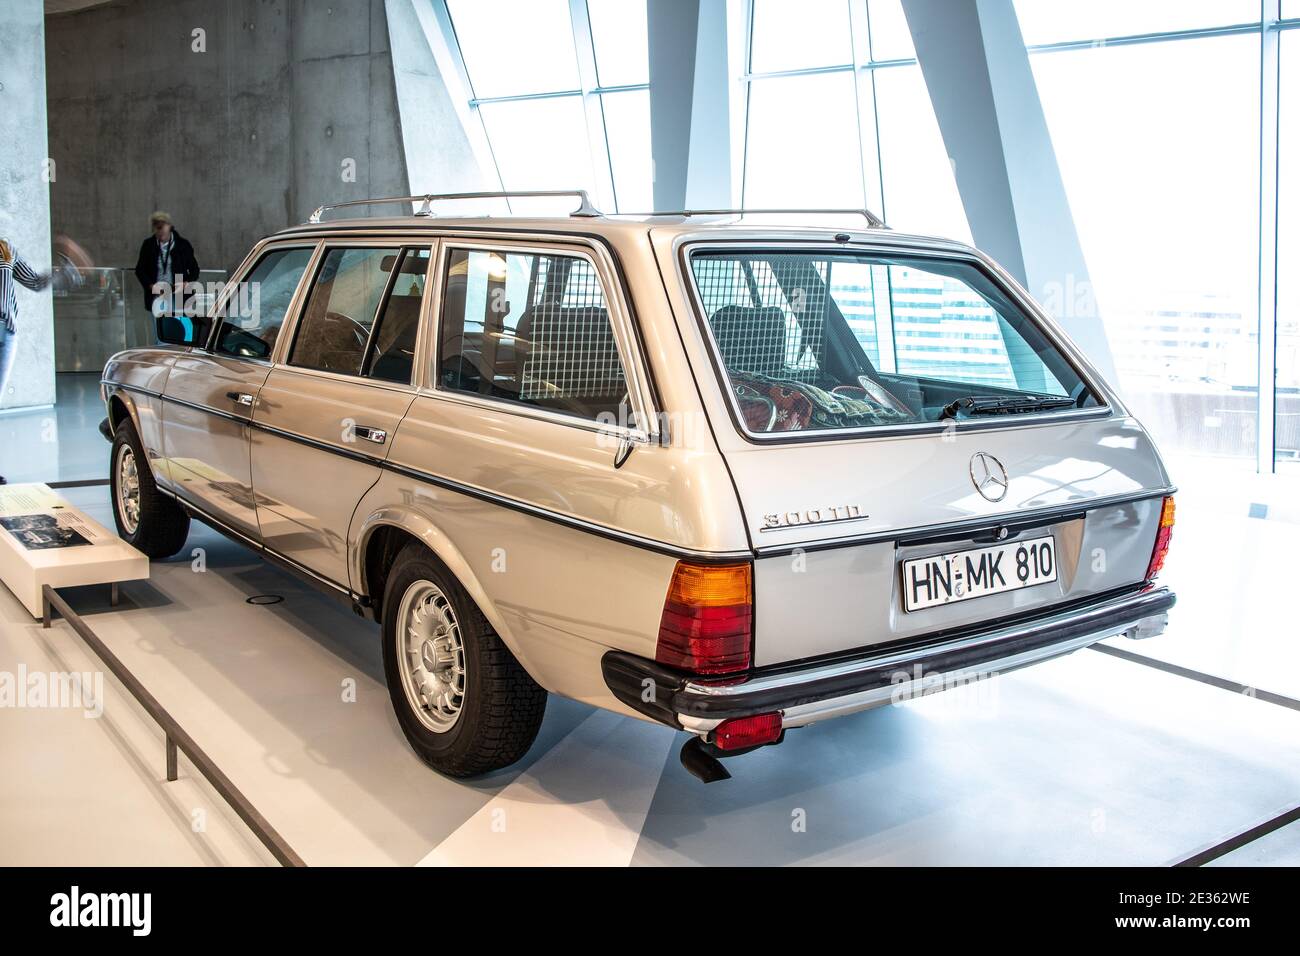 STOCCARDA, GERMANIA, 2019: 1985 Mercedes-Benz 300 TD t-model station wagon  nel museo Mercedes-Benz, HN-MK 810 Foto stock - Alamy